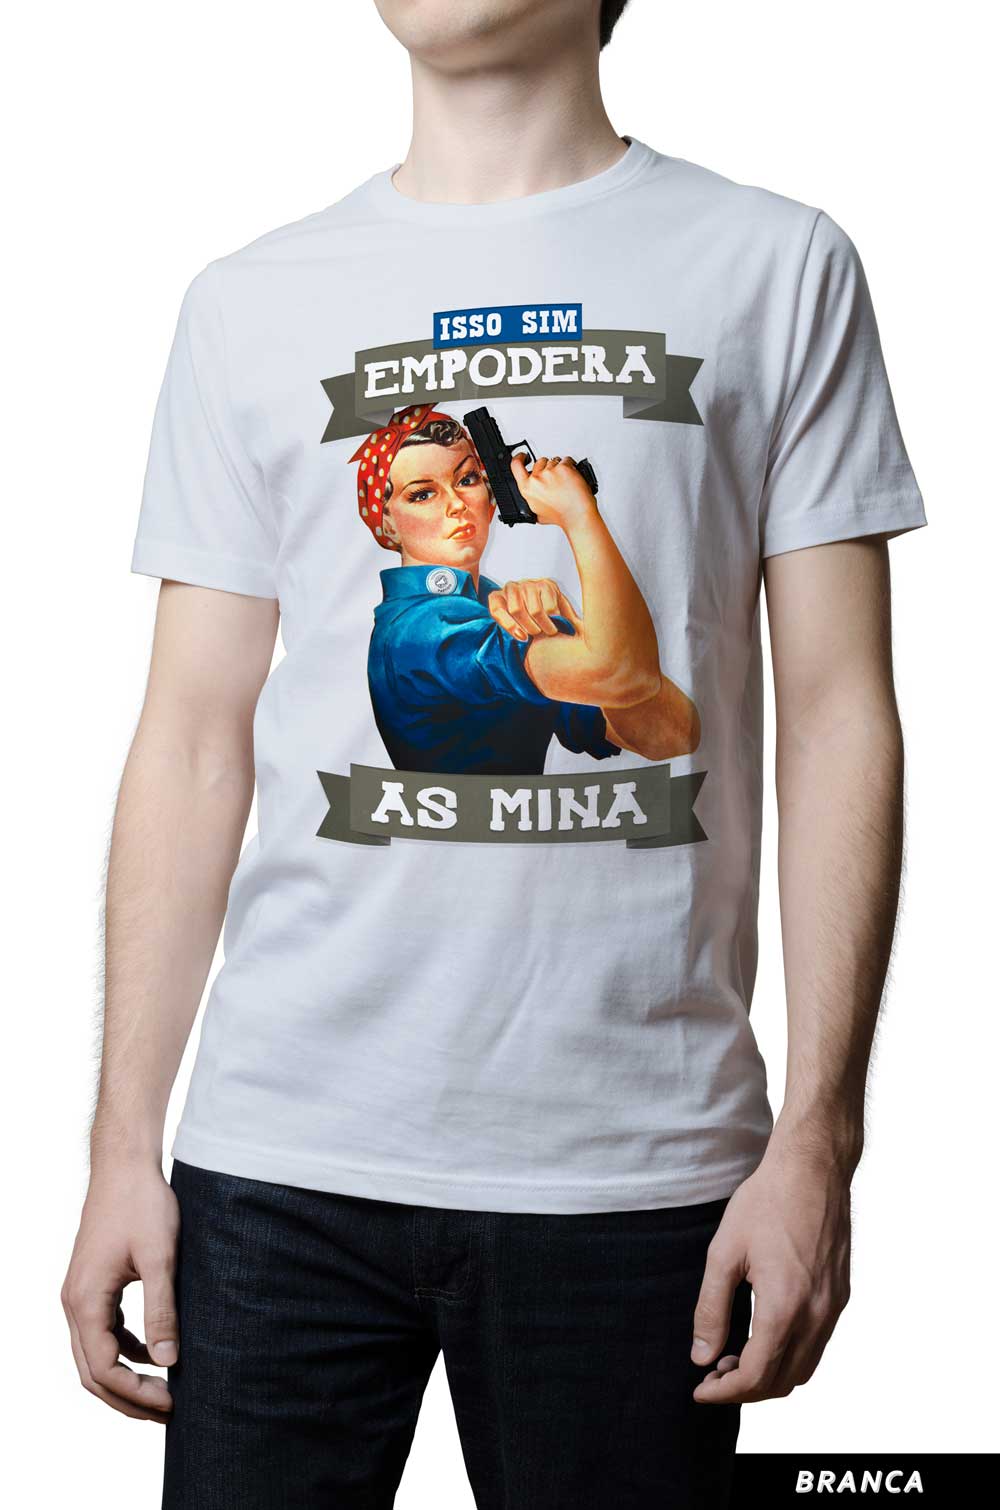 Camiseta - Empodera as Mina